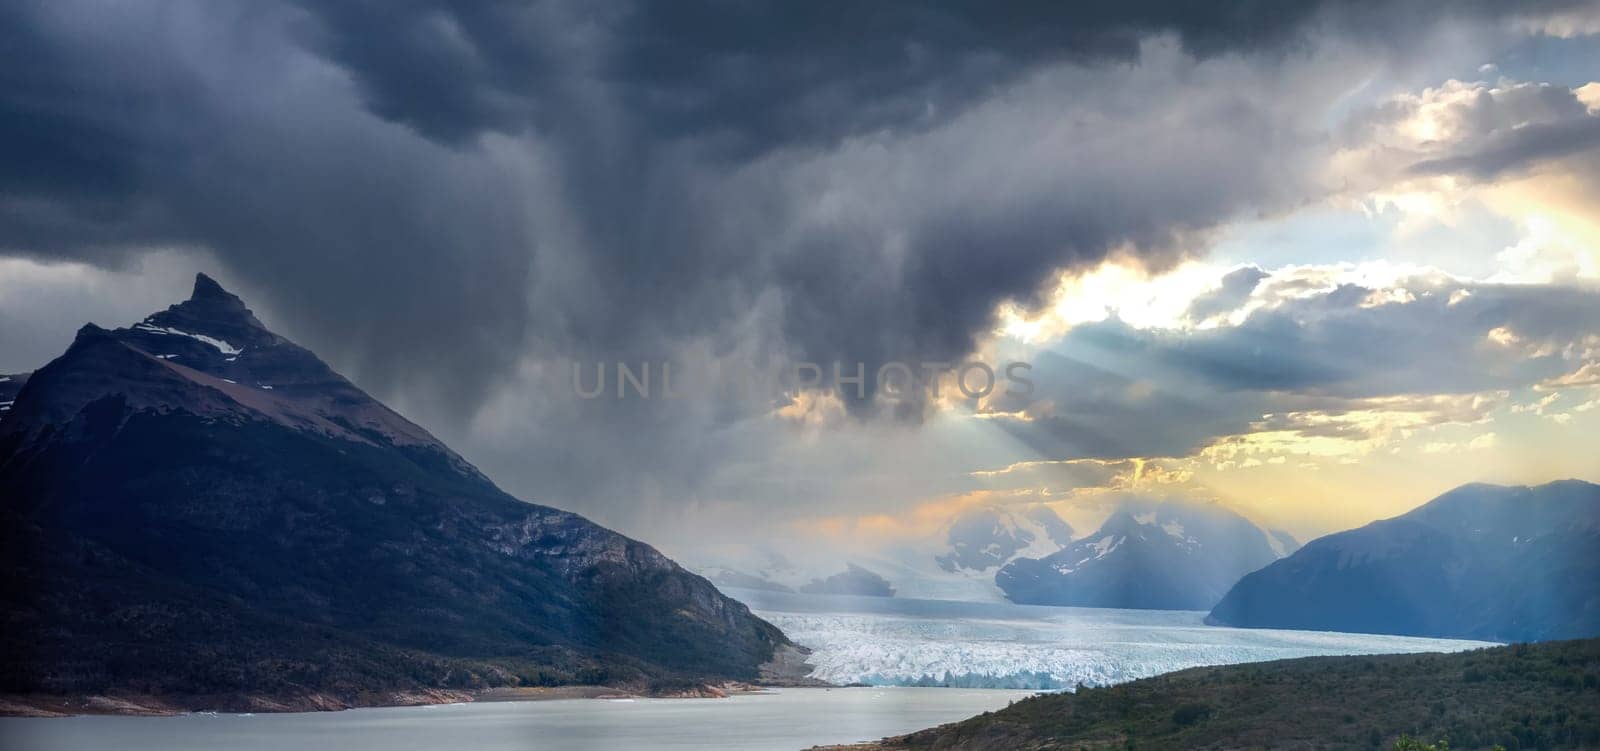 Majestic Glacier and Mountain Landscape Under Stormy Skies by FerradalFCG